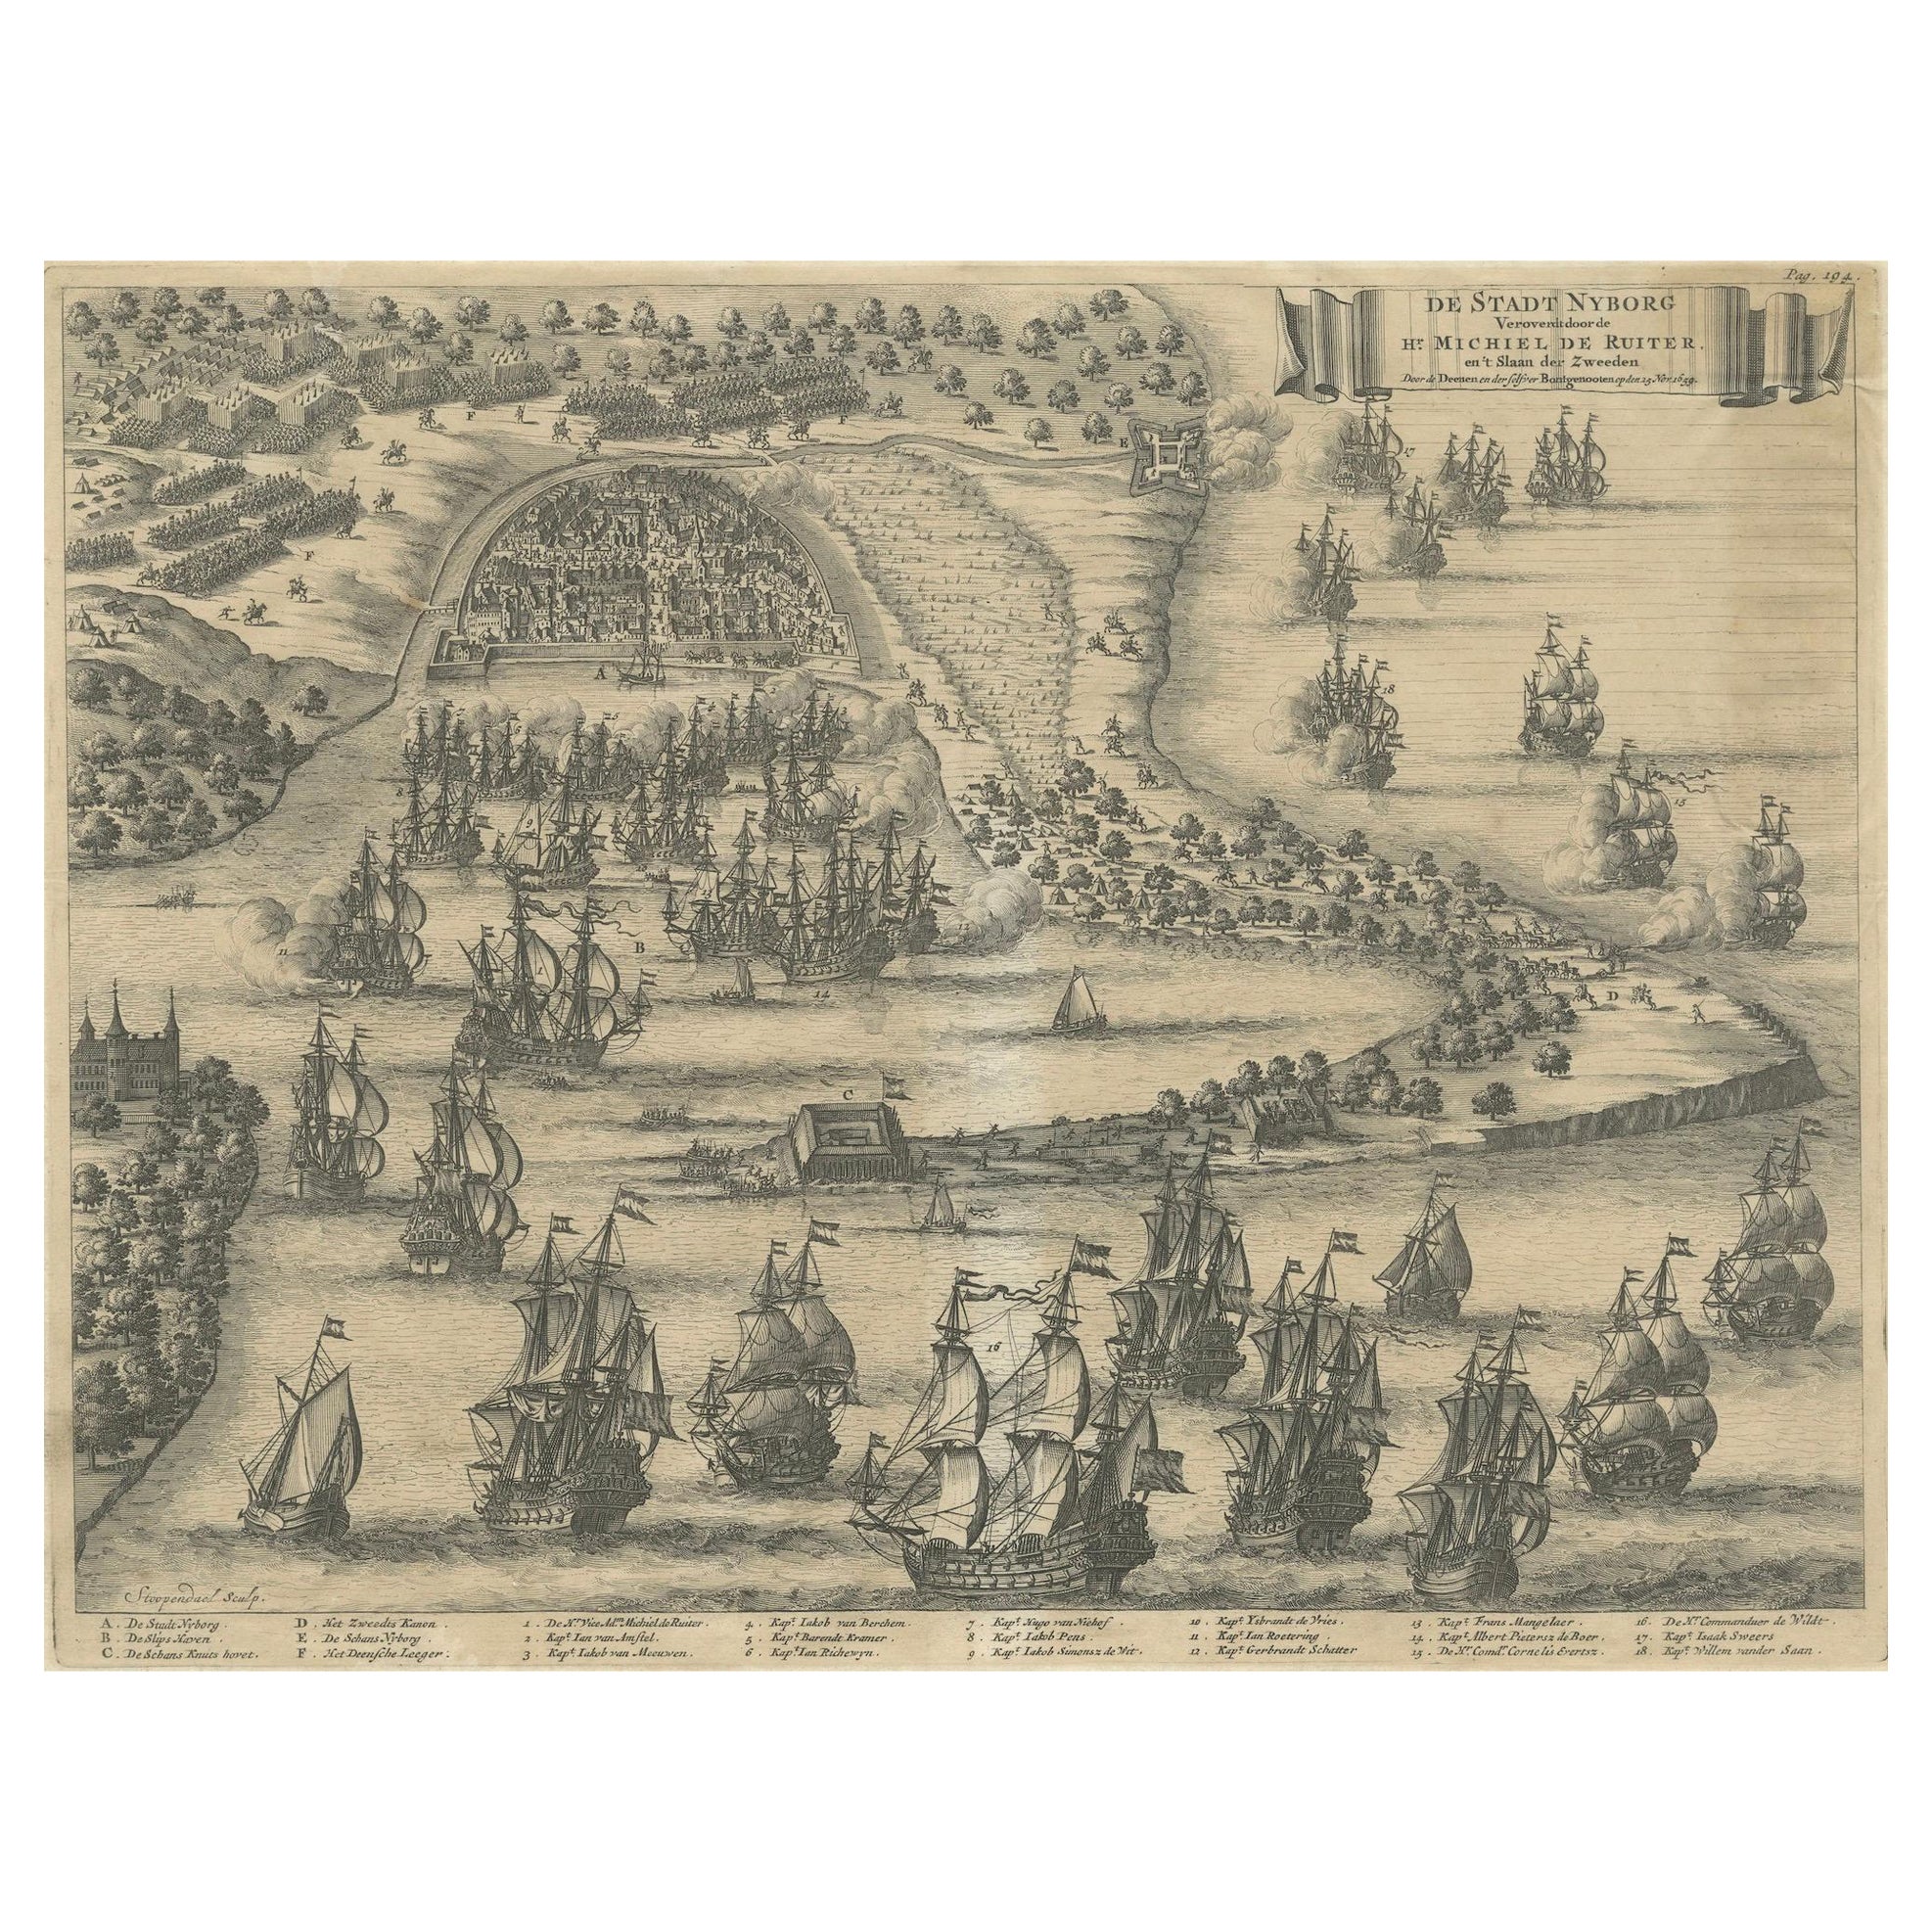 The Siege of Nyborg, 1659: A Strategic Battle of the Dano-Swedish War, 1746